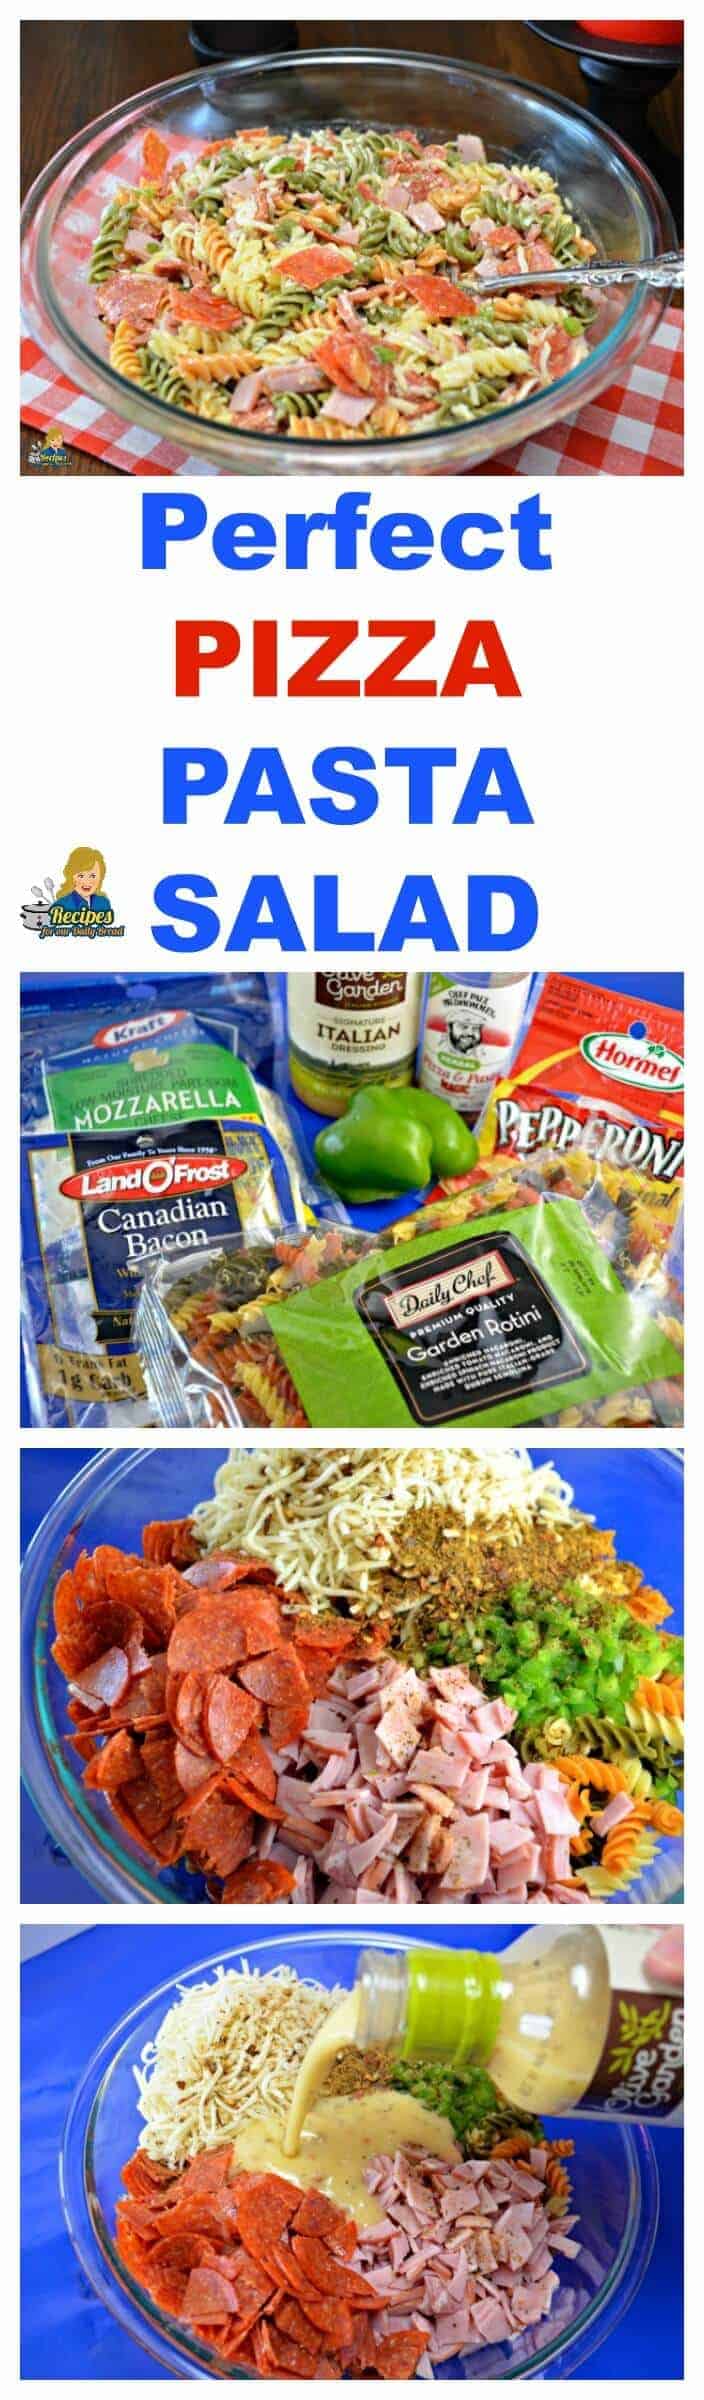 Ingredients to make pizza pasta salad